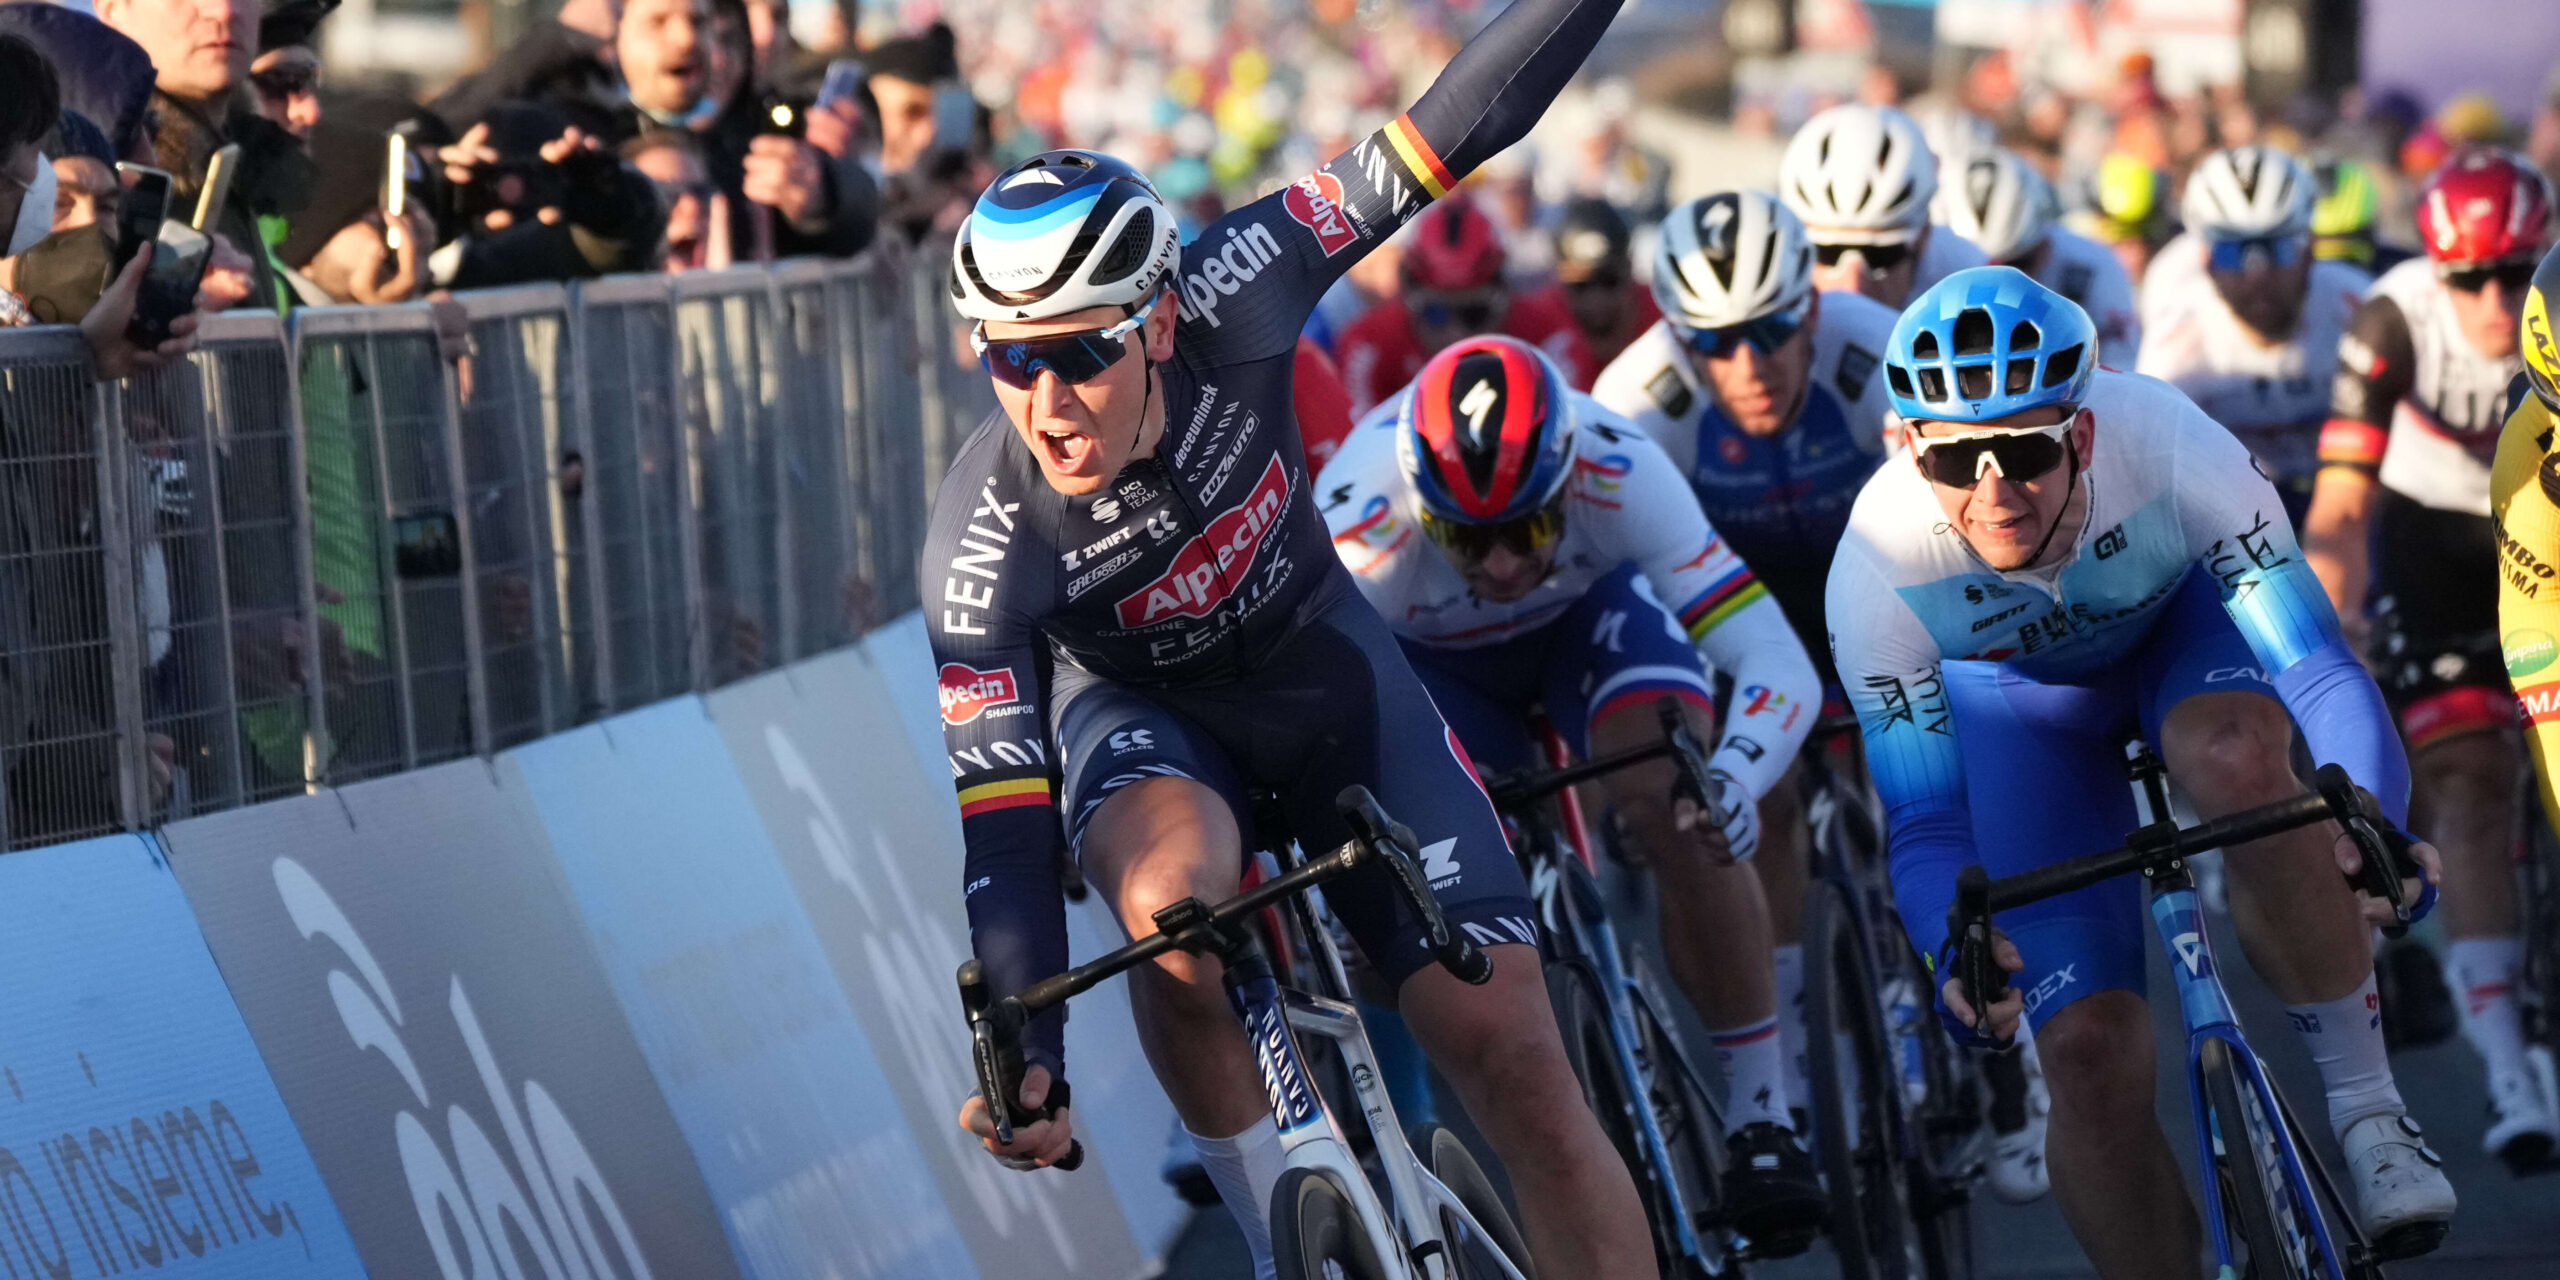 Tim Merlier wins Stage 2 of the 2022 Tirreno-Adriatico EOLO. Ganna keeps the Maglia Azzurra